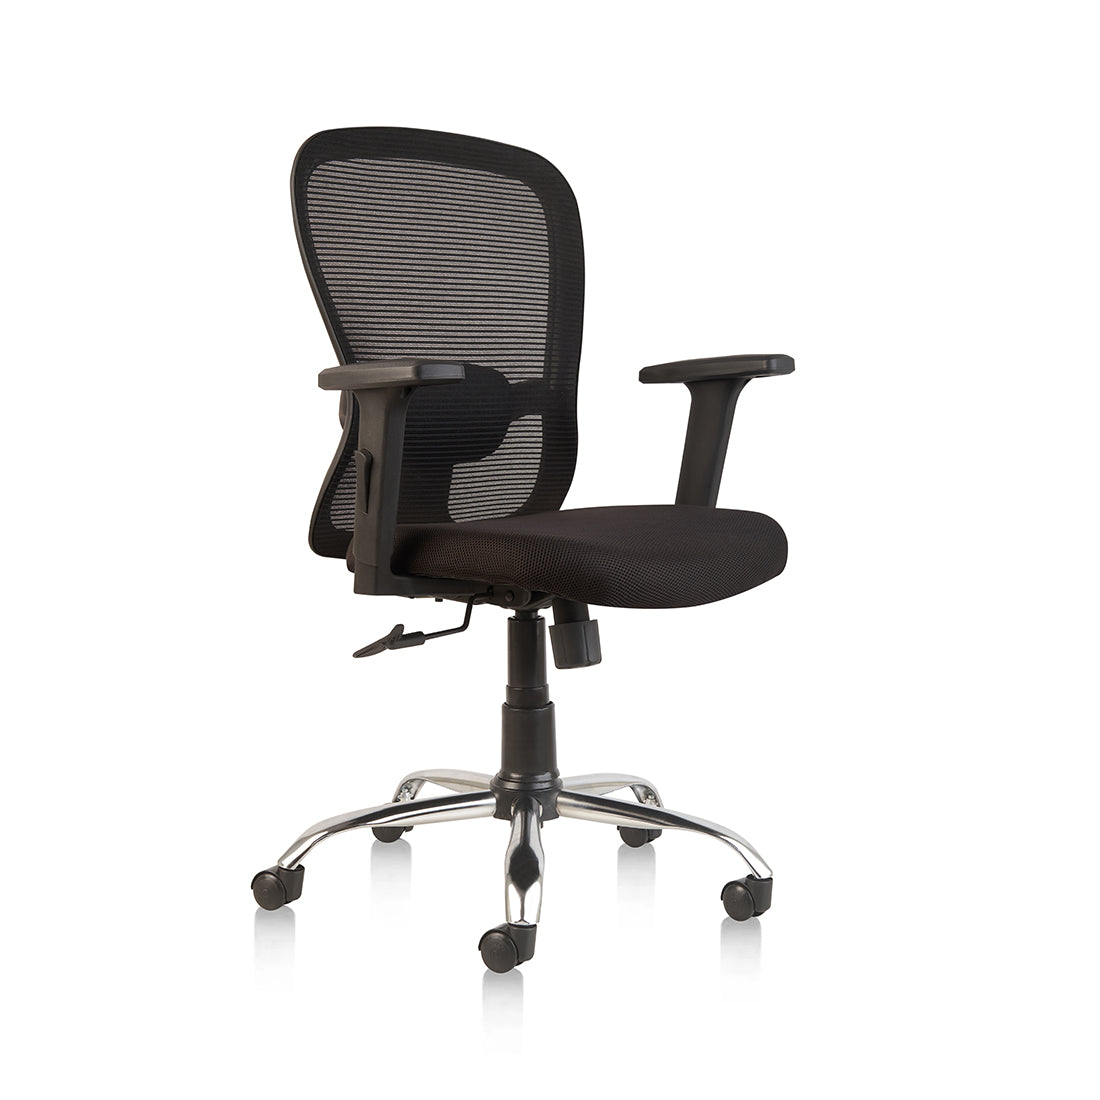 Aries C160 Mesh Office Chair [BLACK] CellBell